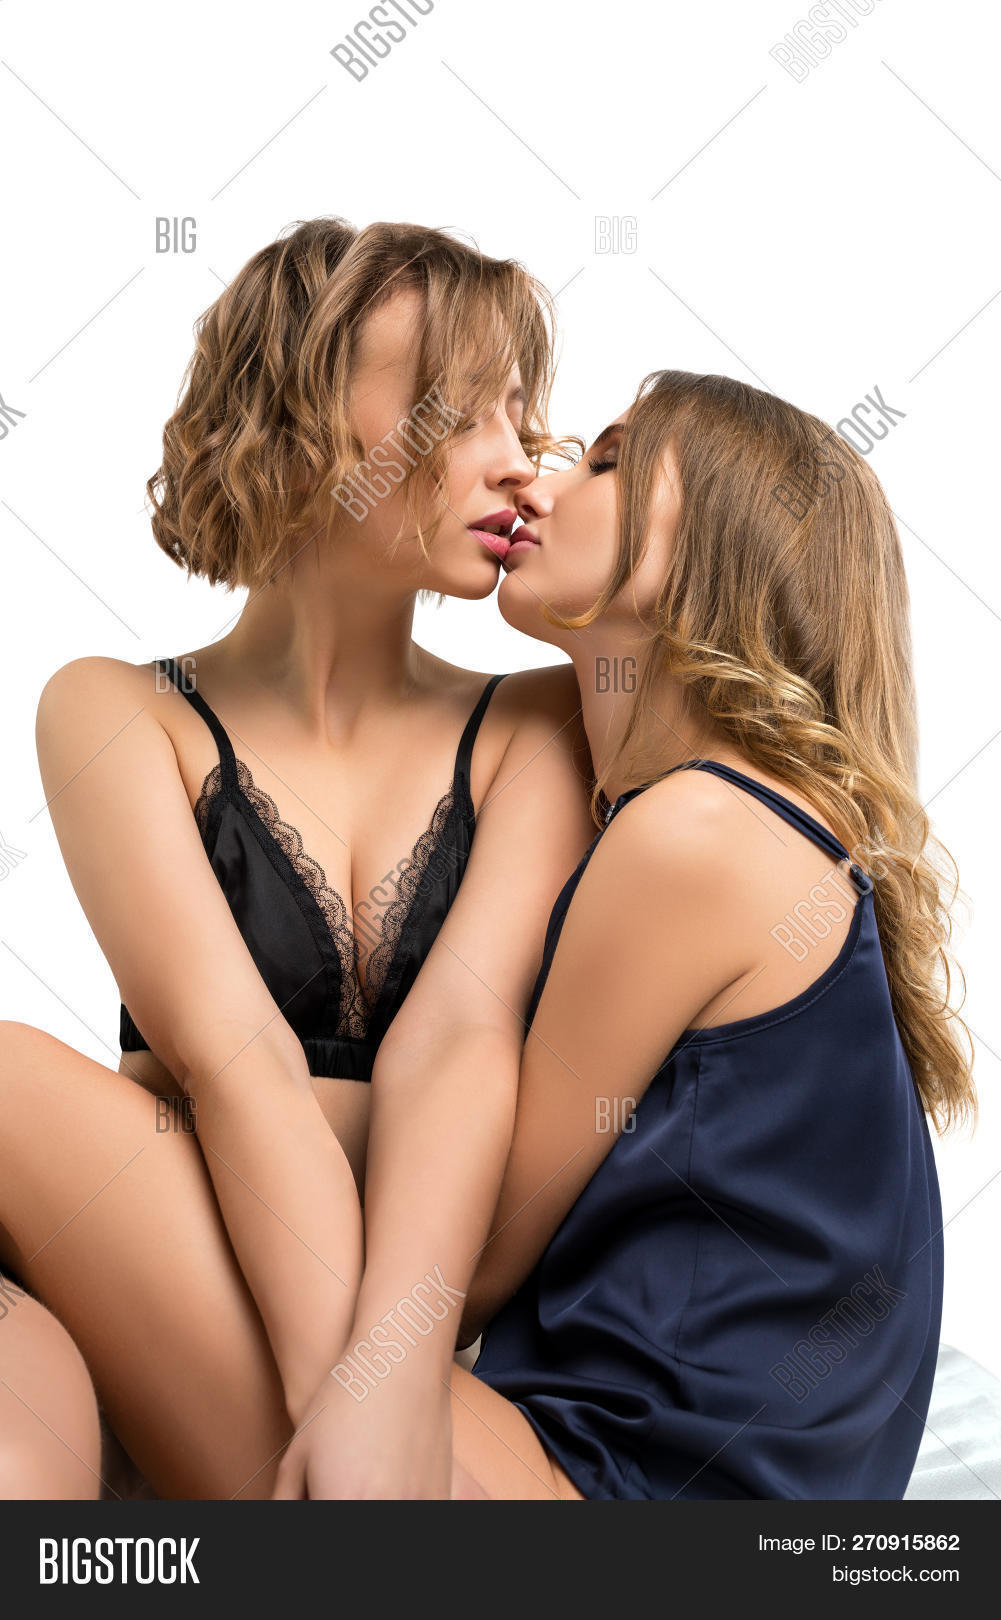 bill prahl share hot girls kissing each other photos